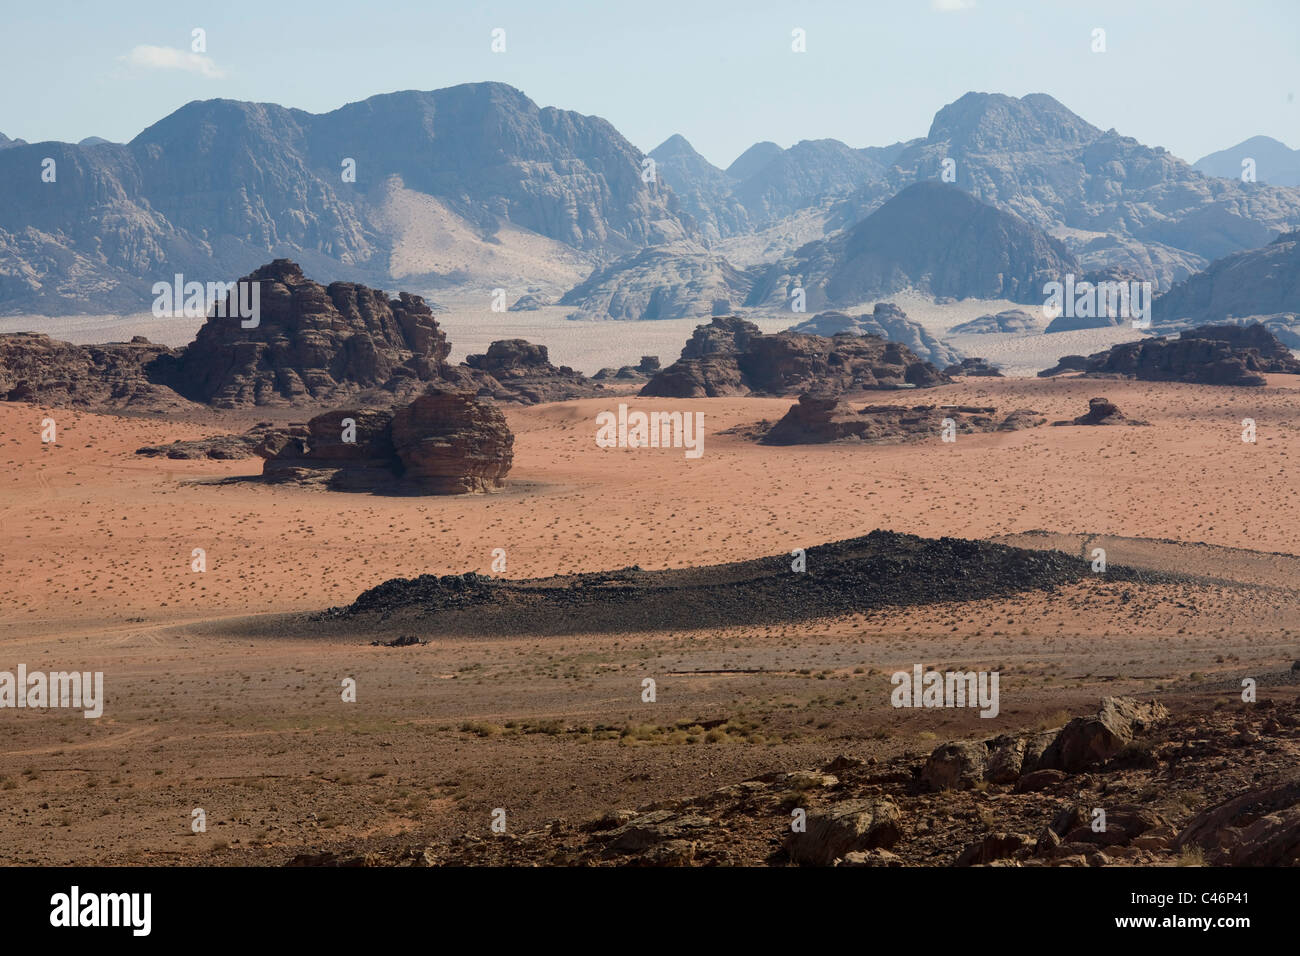 Photograph of the massive cliffs of the Jordanian desert Stock Photo